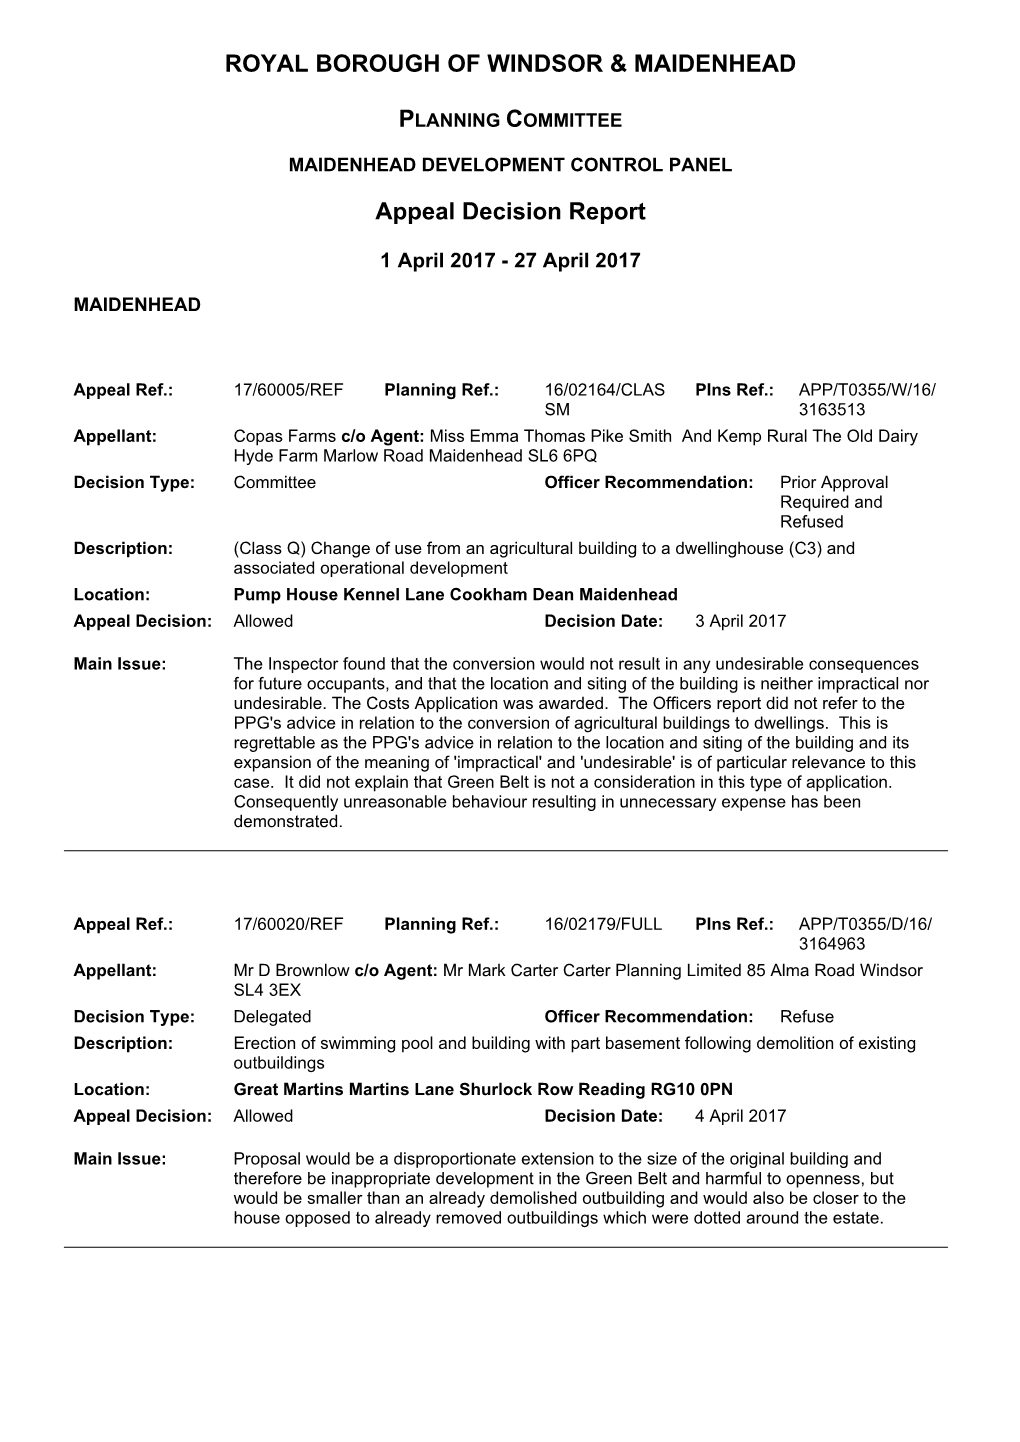 ROYAL BOROUGH of WINDSOR & MAIDENHEAD Appeal Decision Report